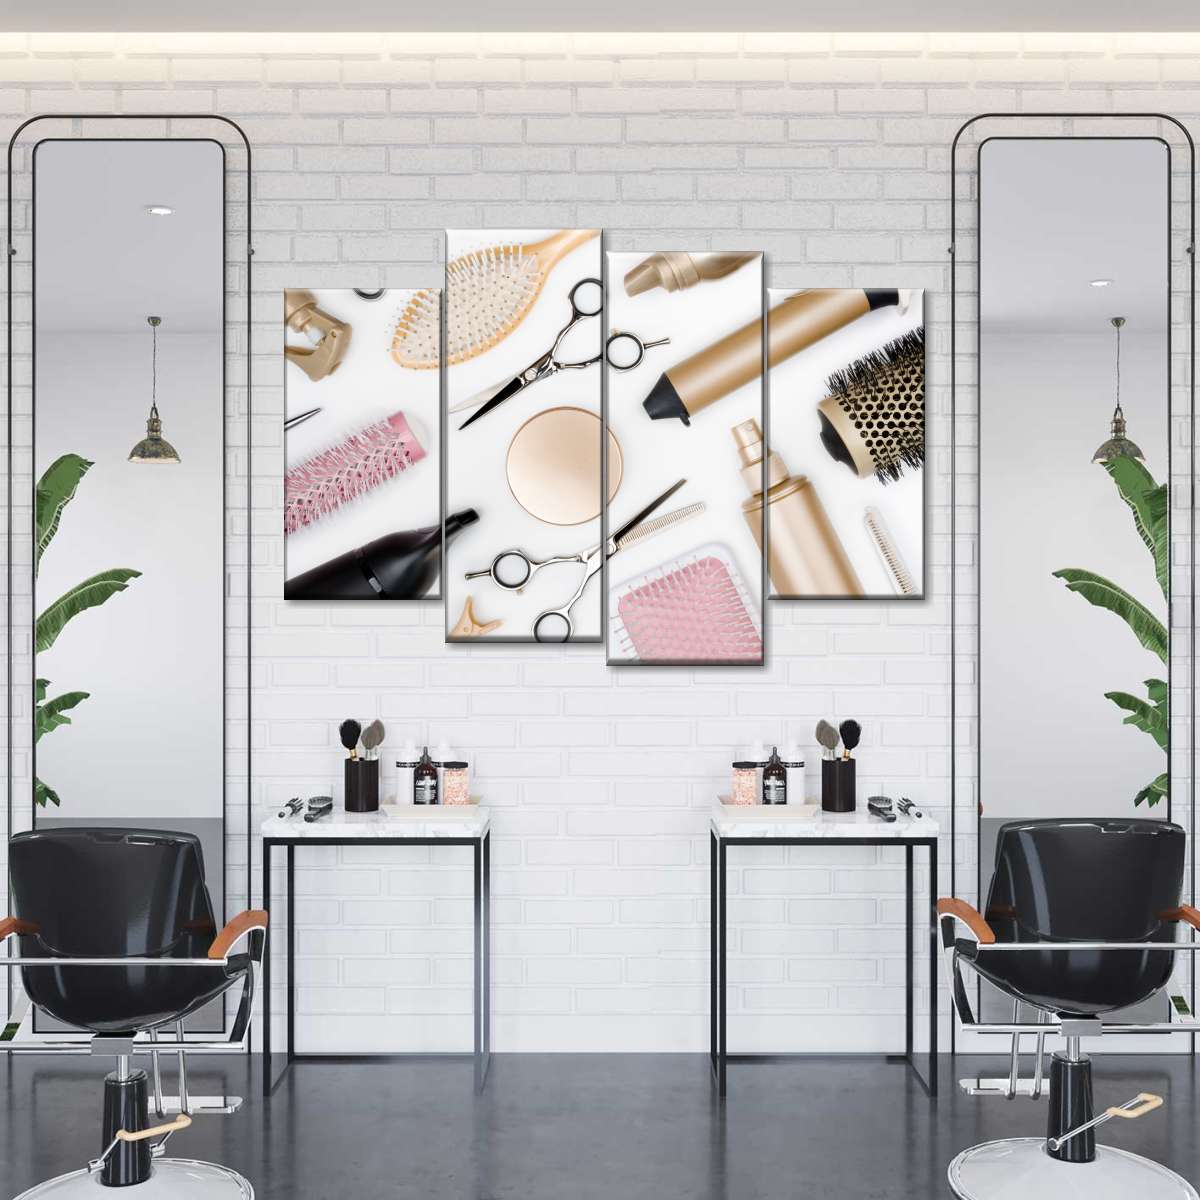 salon wallpaper ideas